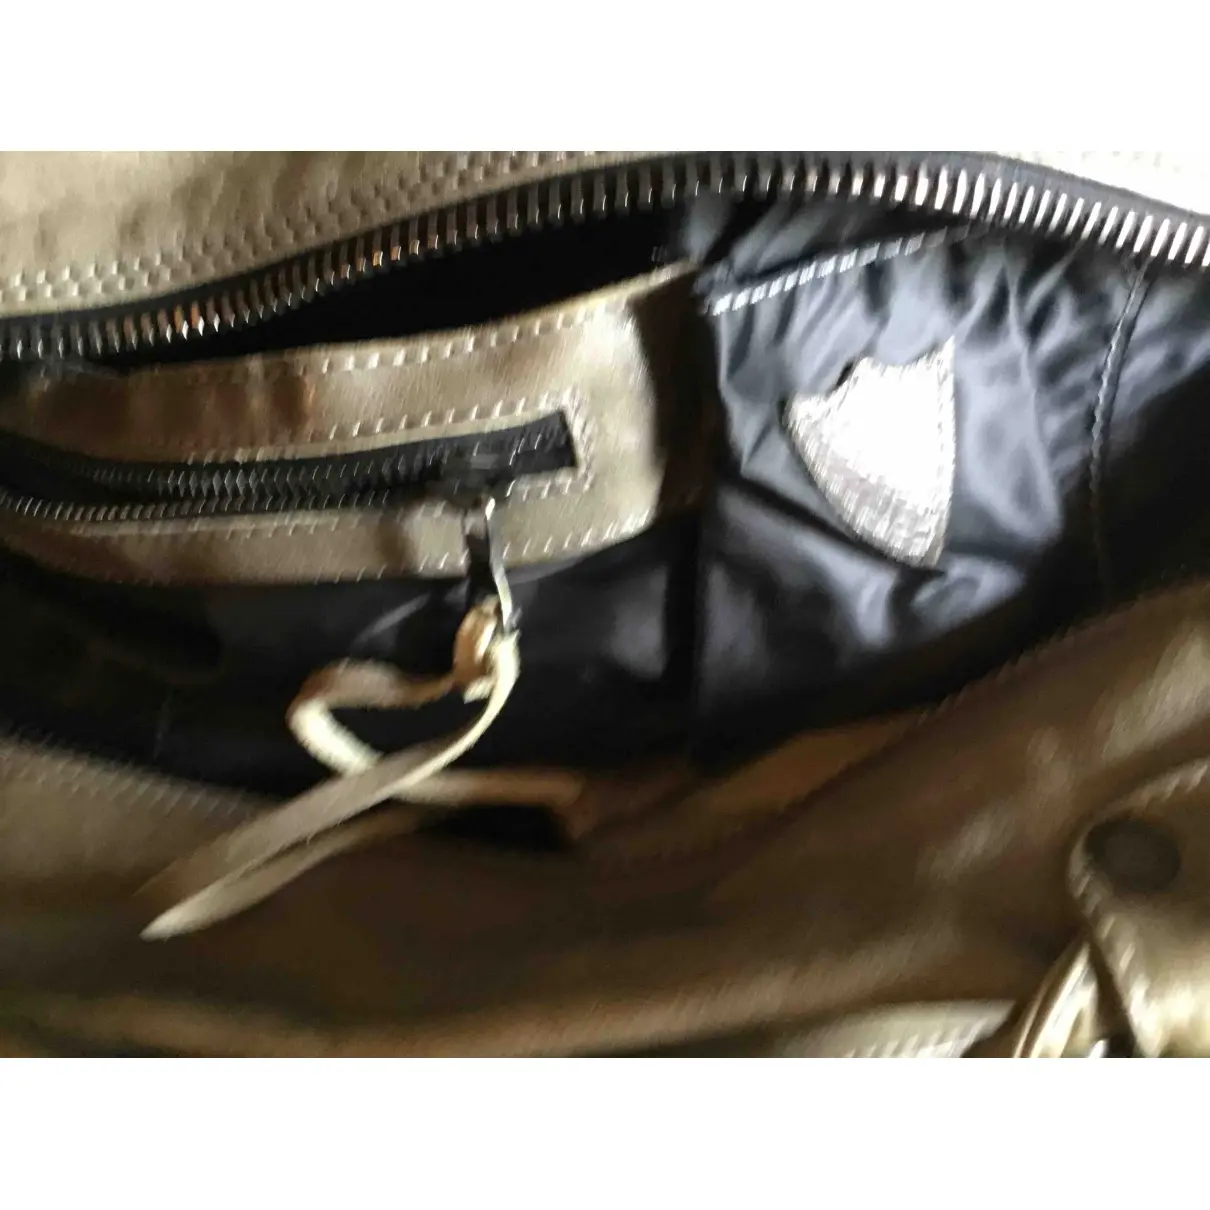 Buy Htc Leather handbag online